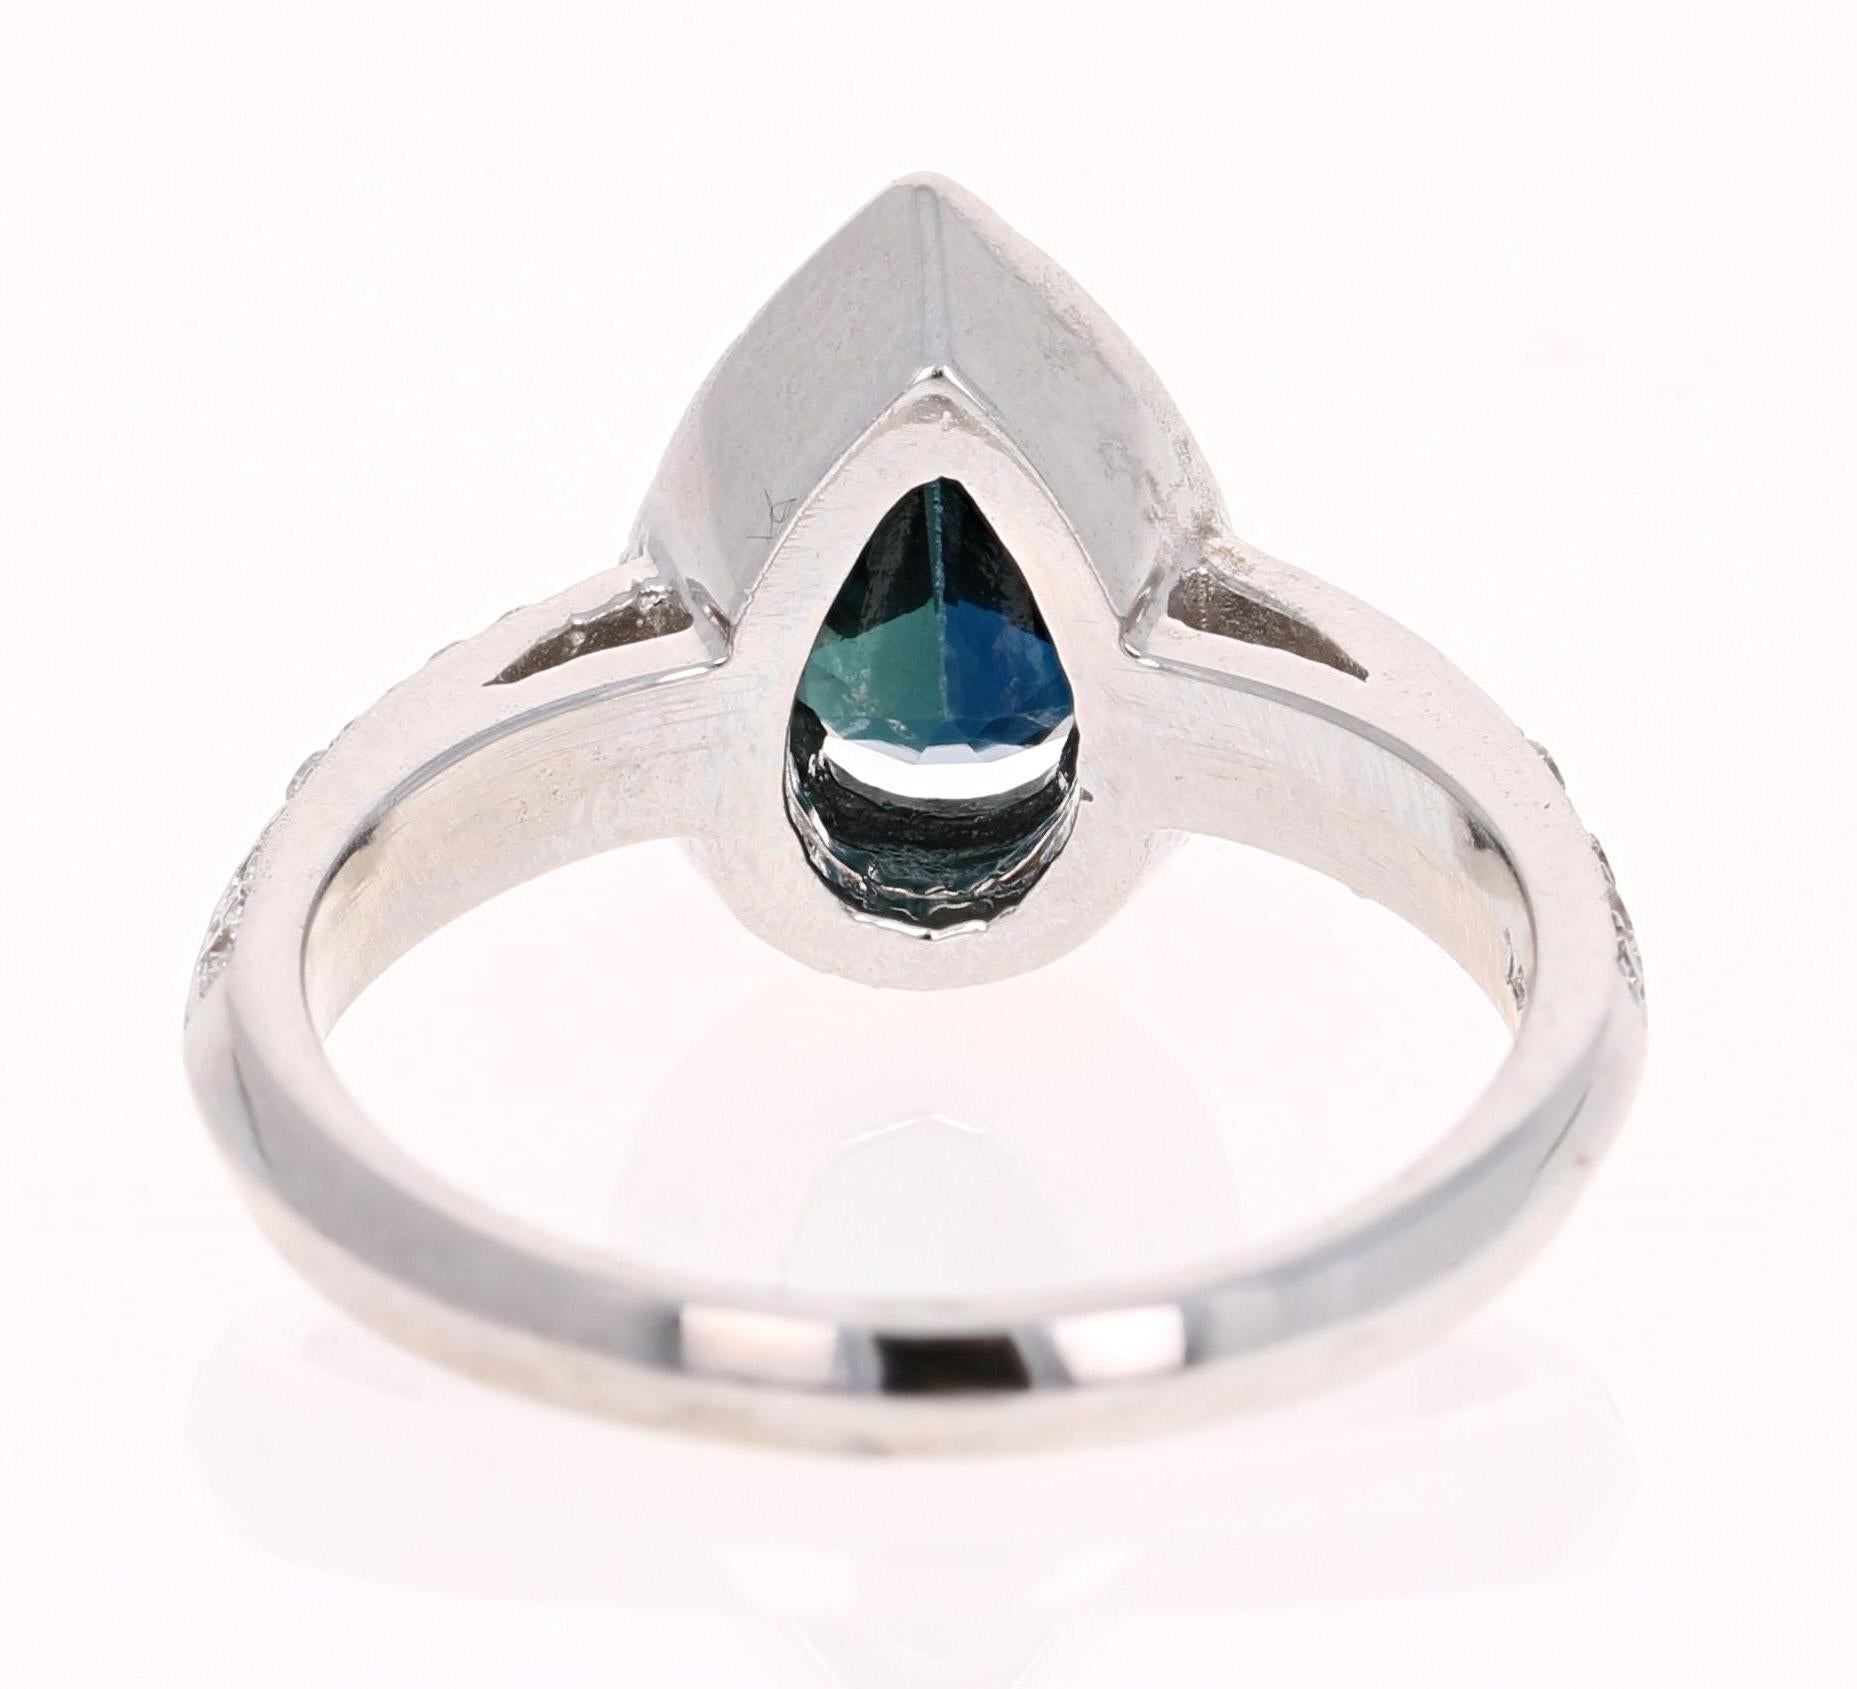 12 carat diamond ring